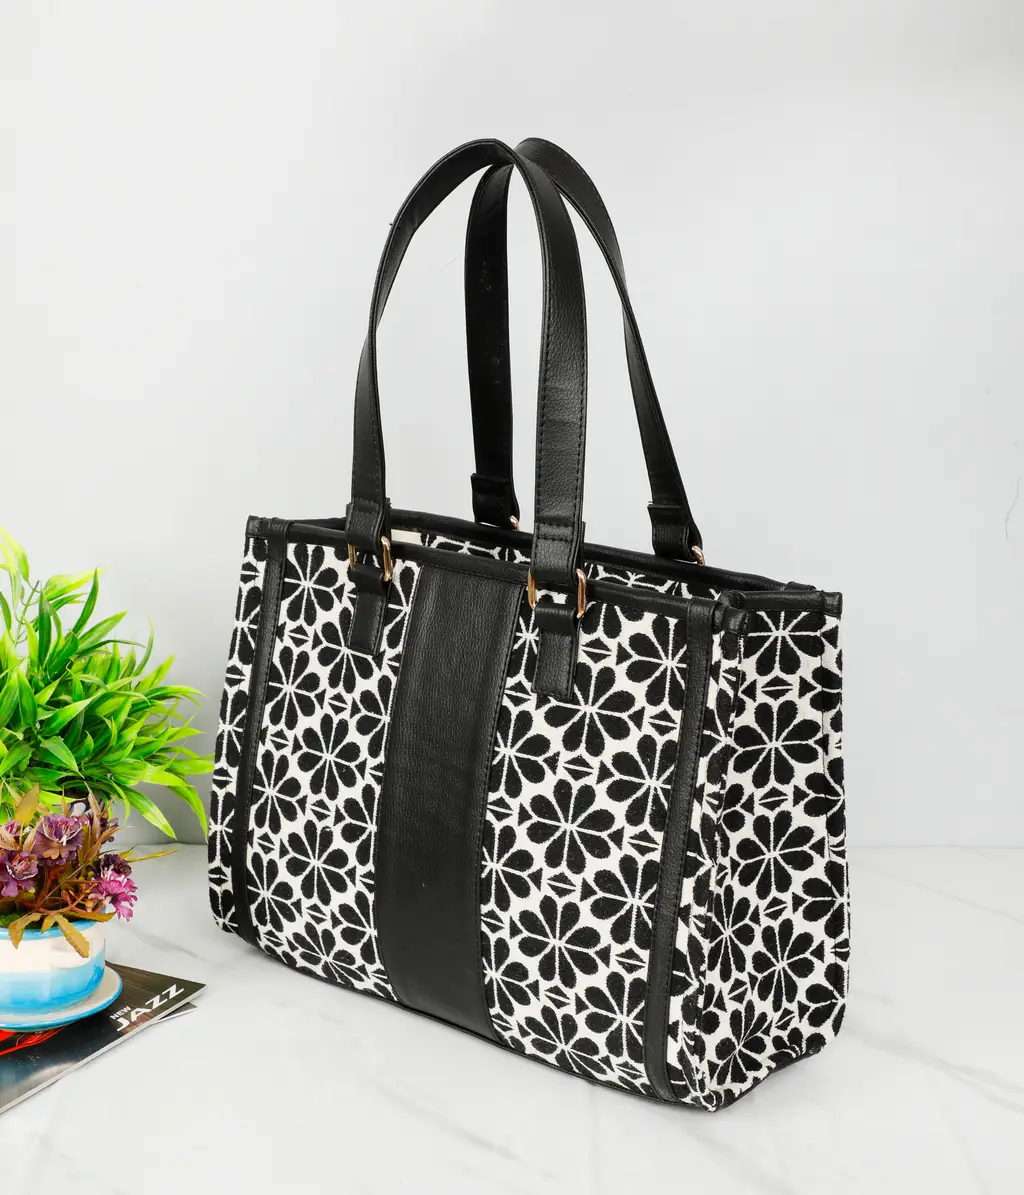 Polyester Cotton printed handbag, center strap, floral, white, black, 14x11